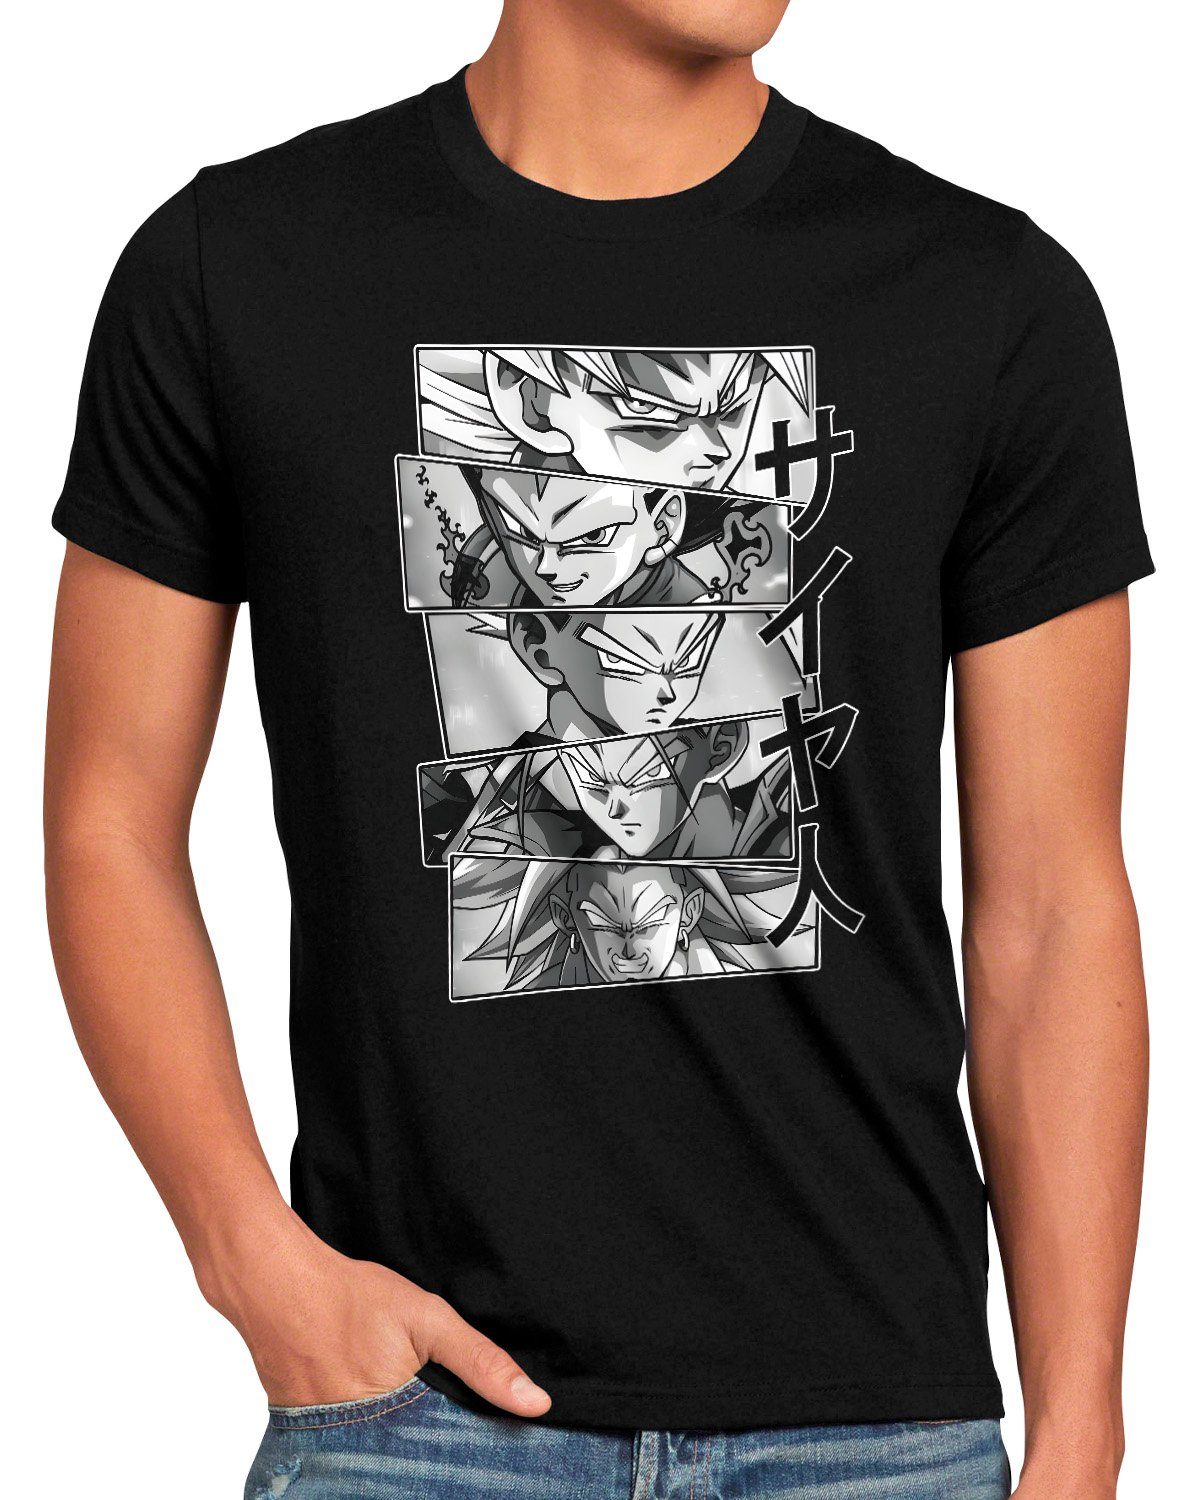 Saiyan kakarot breakers gt T-Shirt dragonball Heroes songoku the Print-Shirt super style3 z Herren